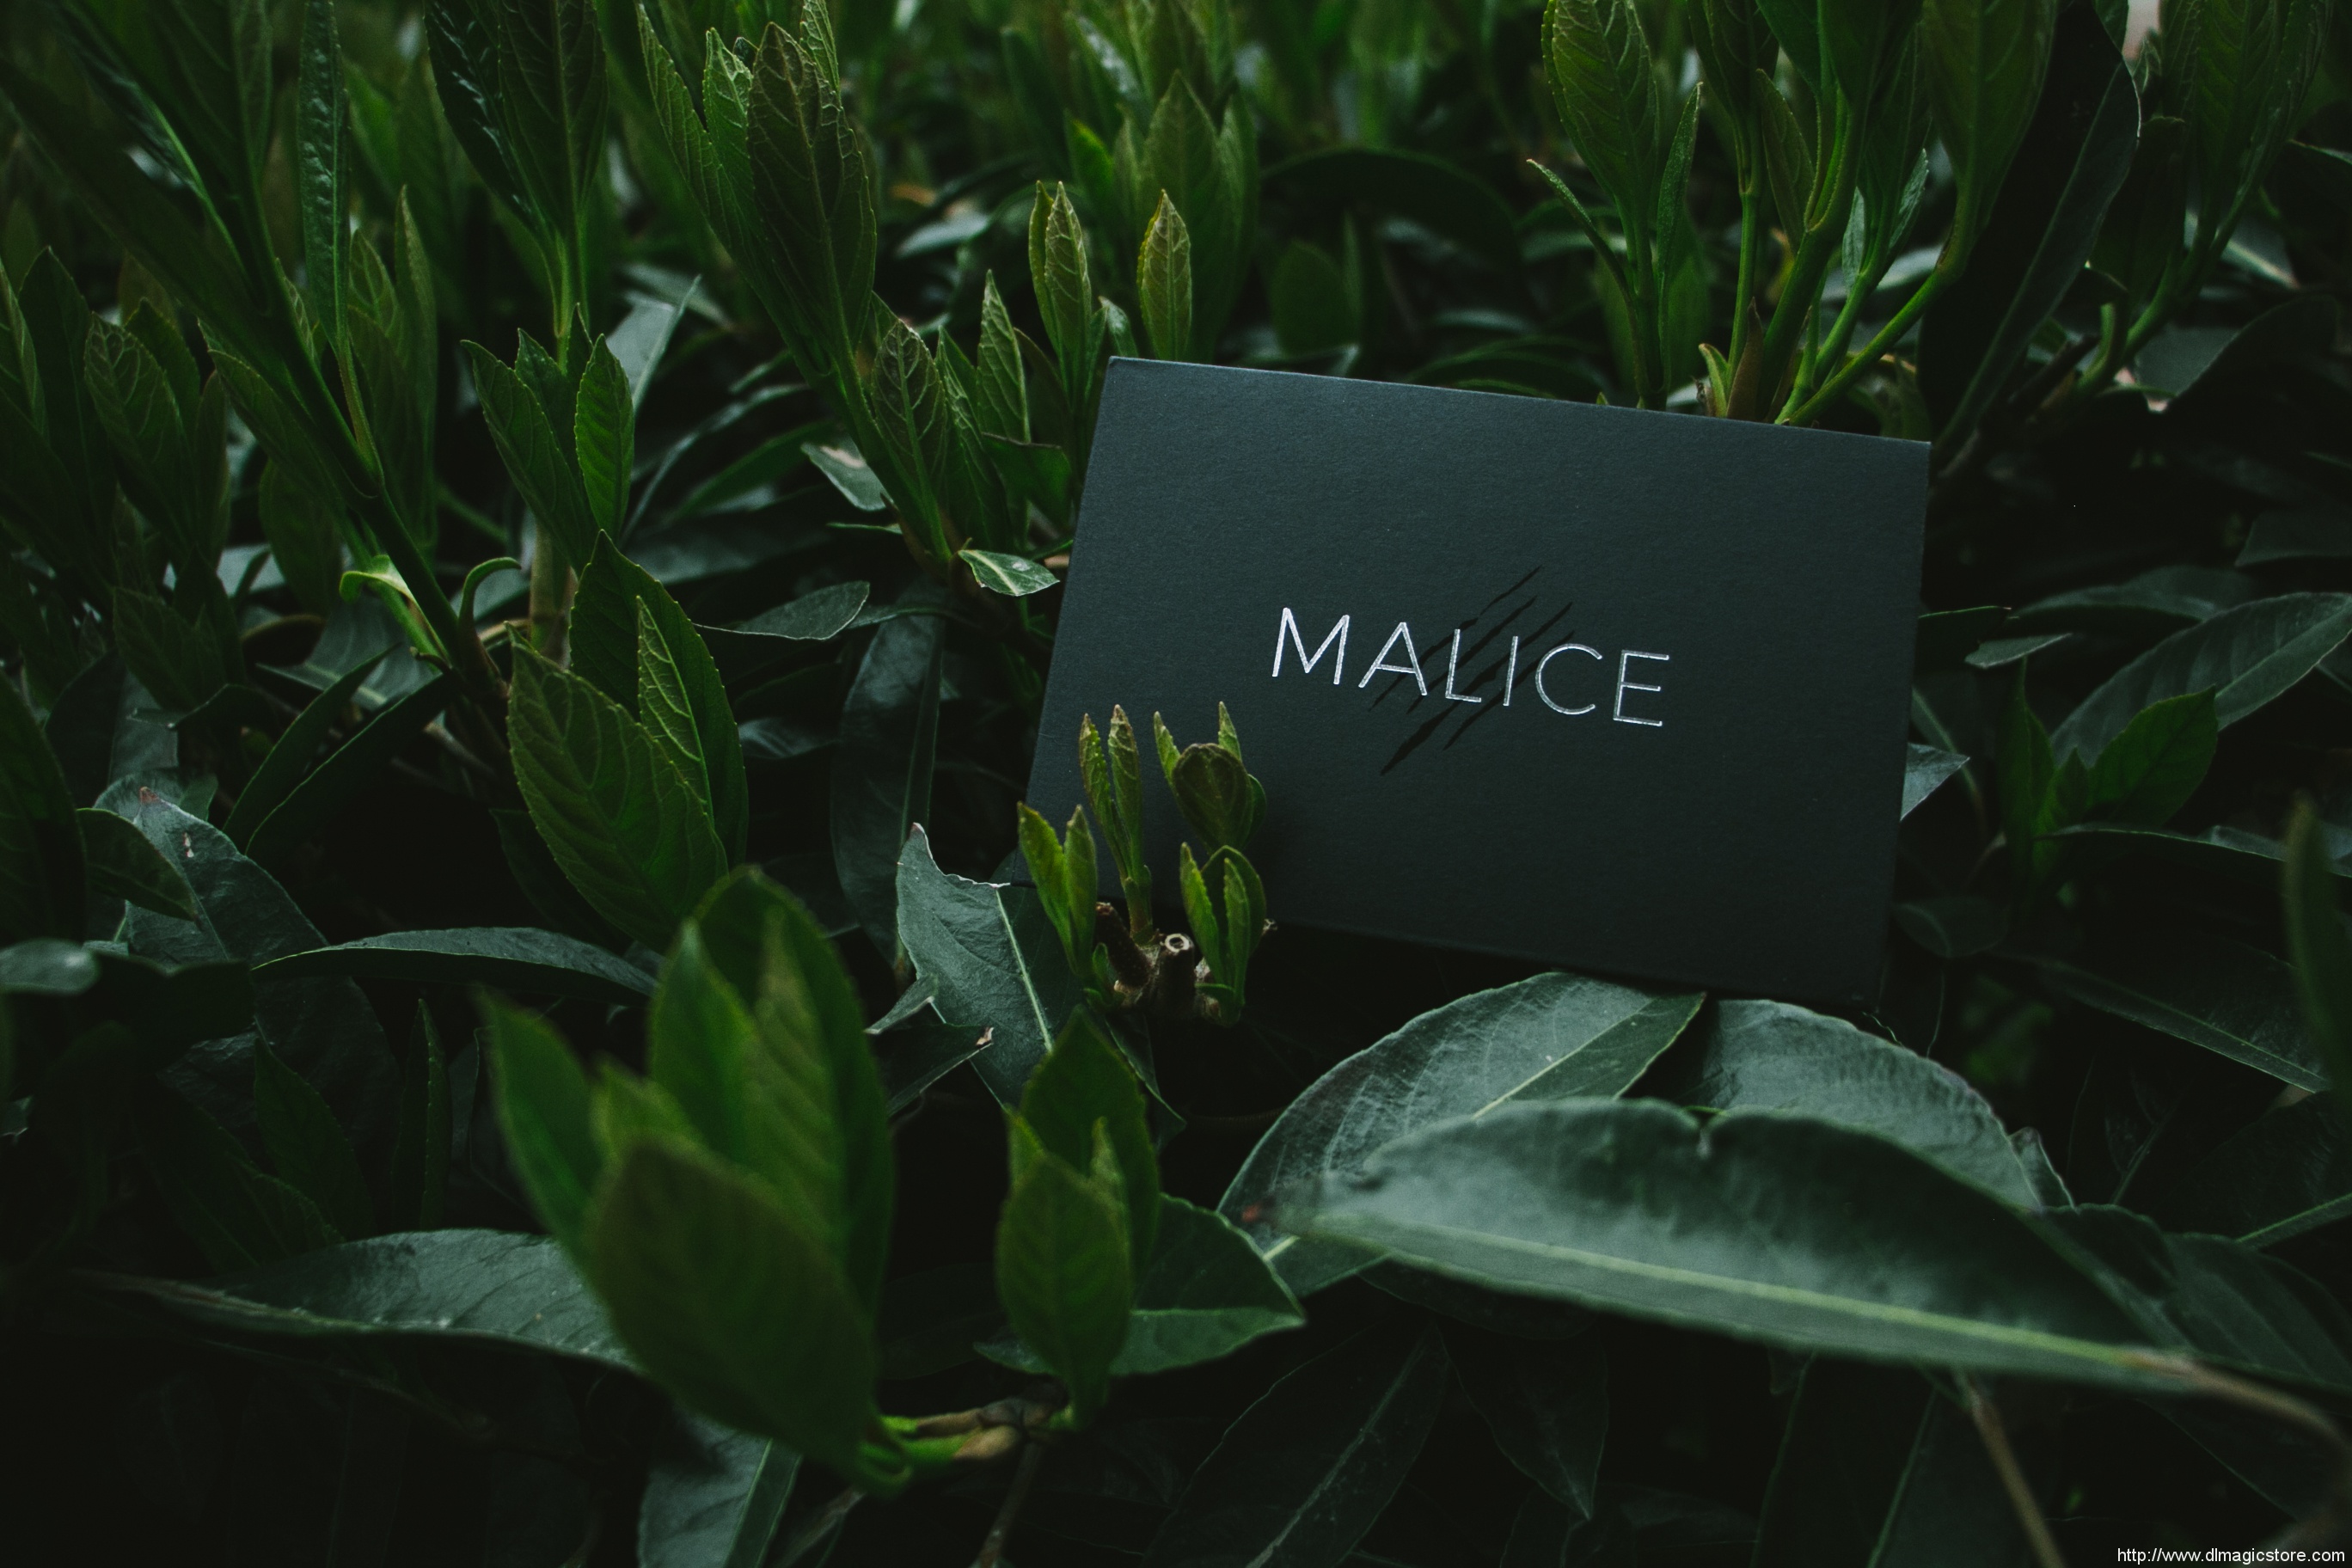 Malice by Eric Jones and Lost Art Magic